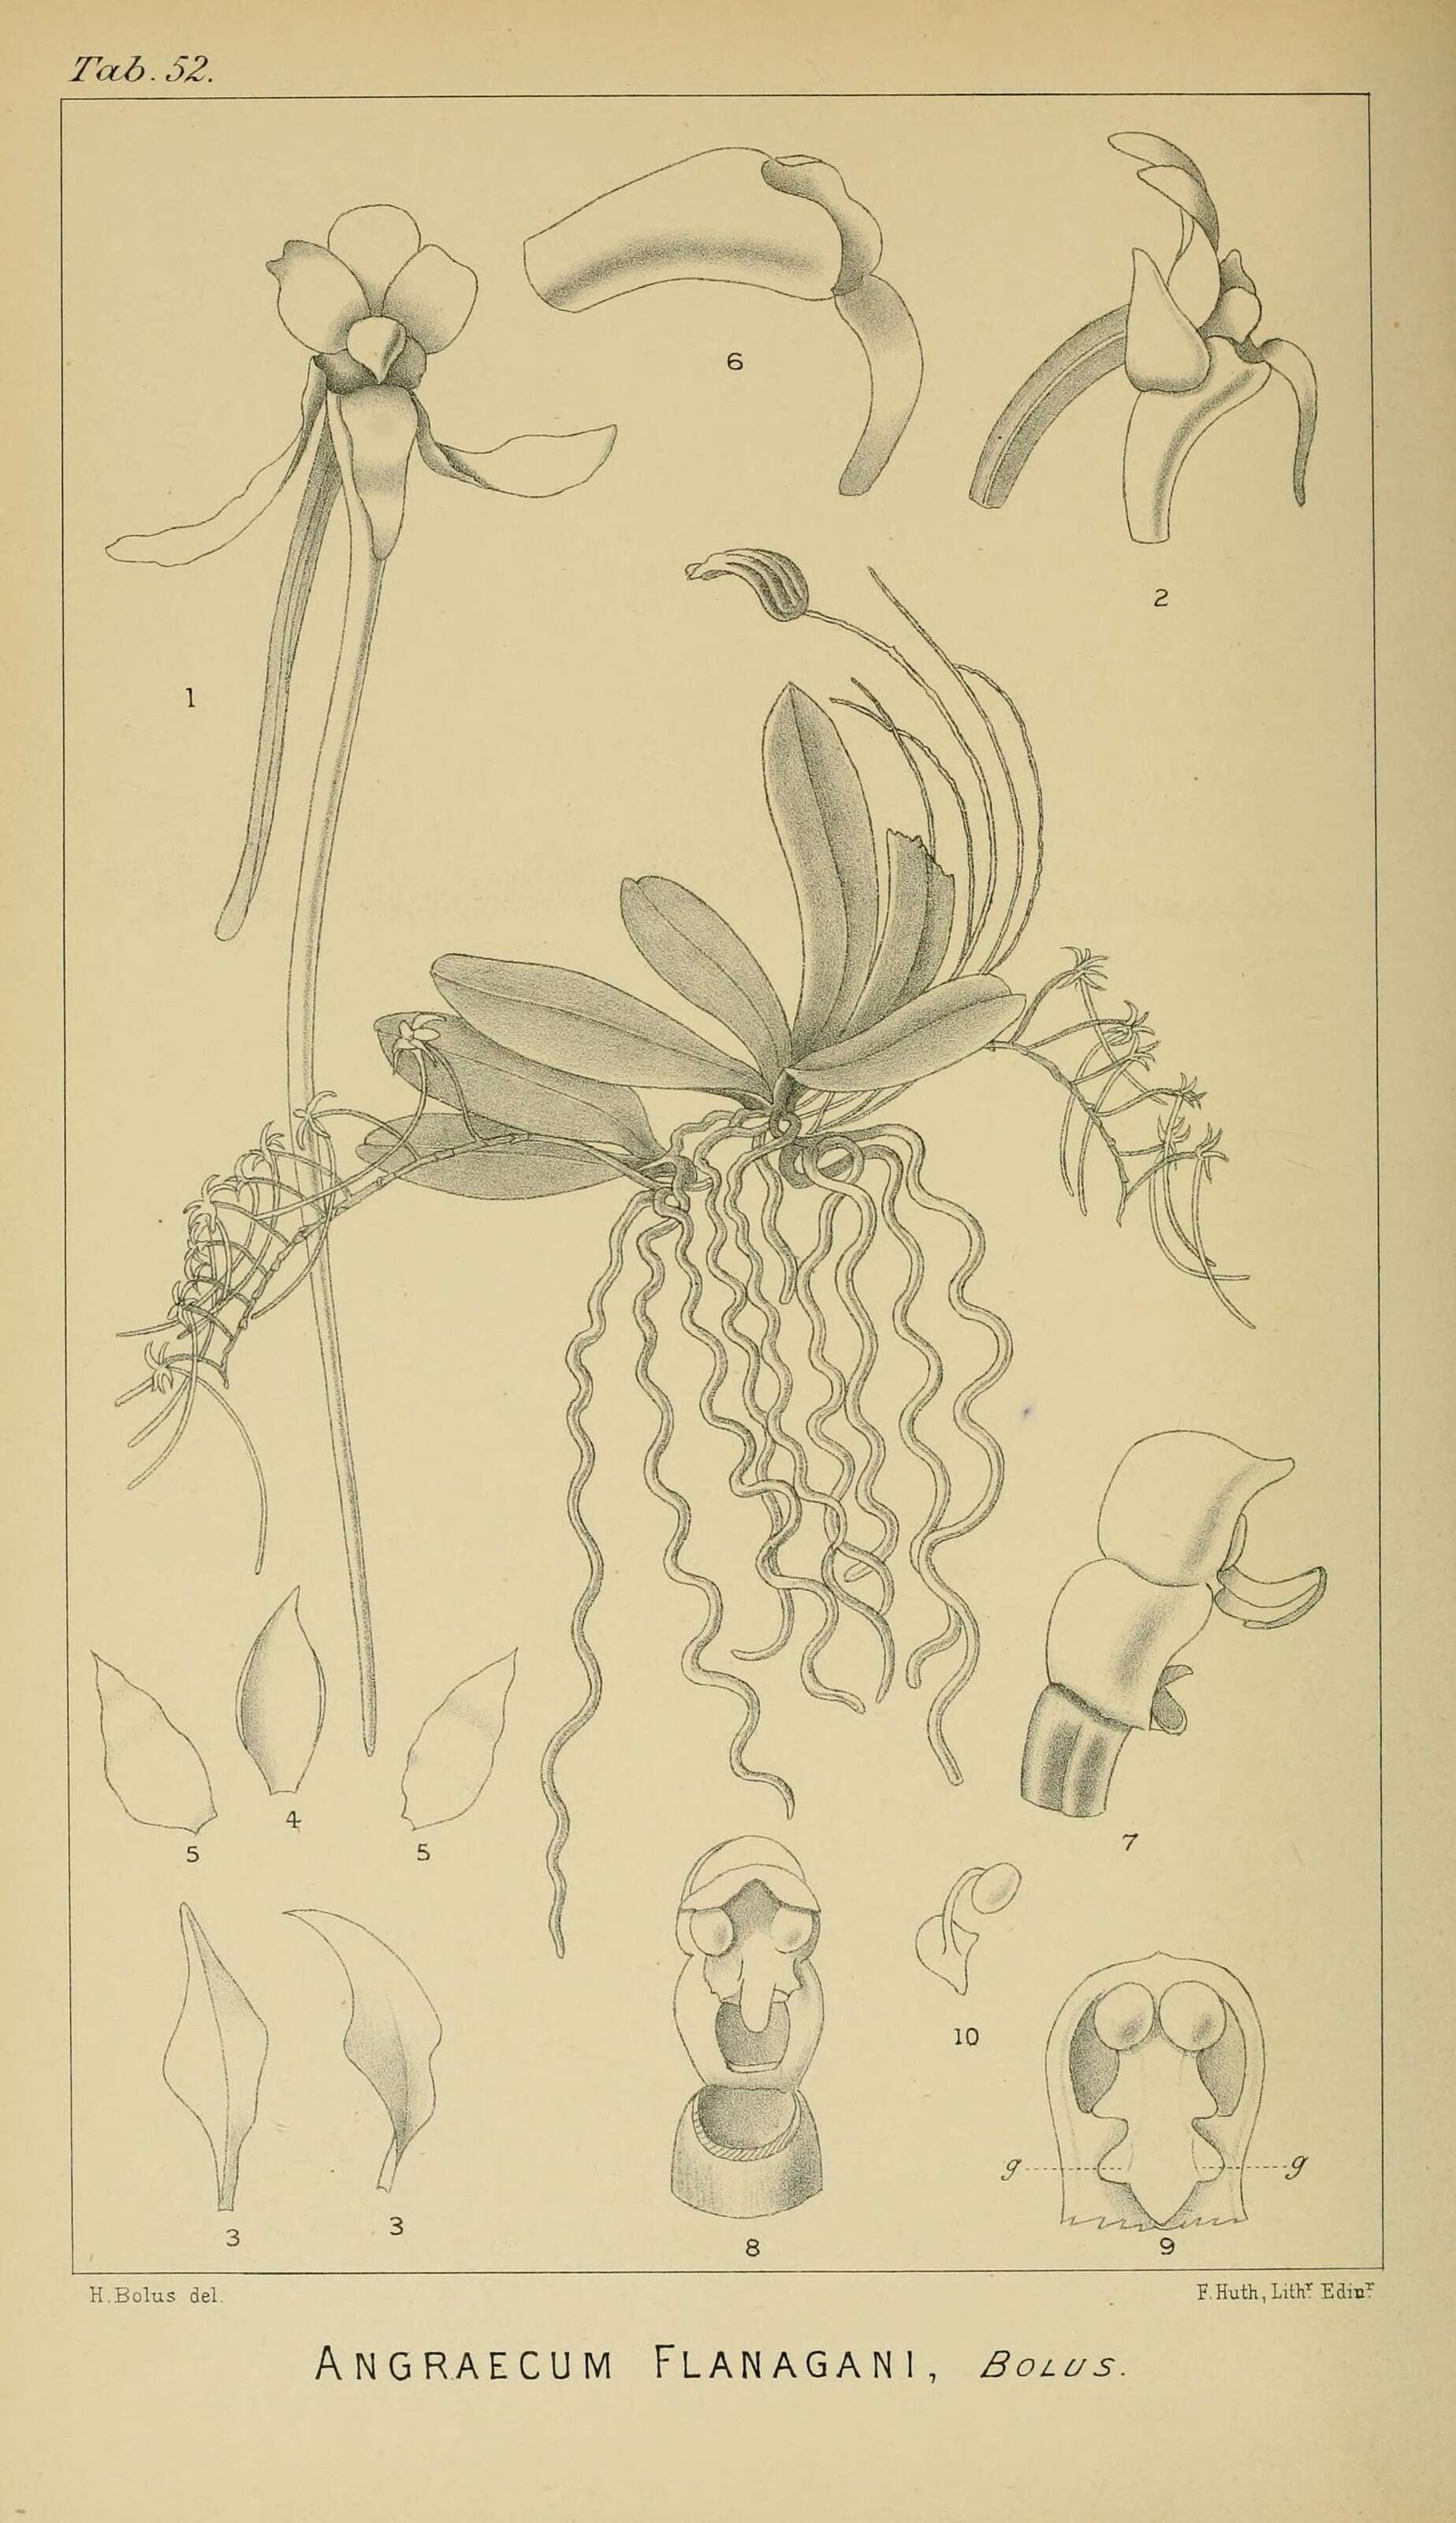 Image of Mystacidium